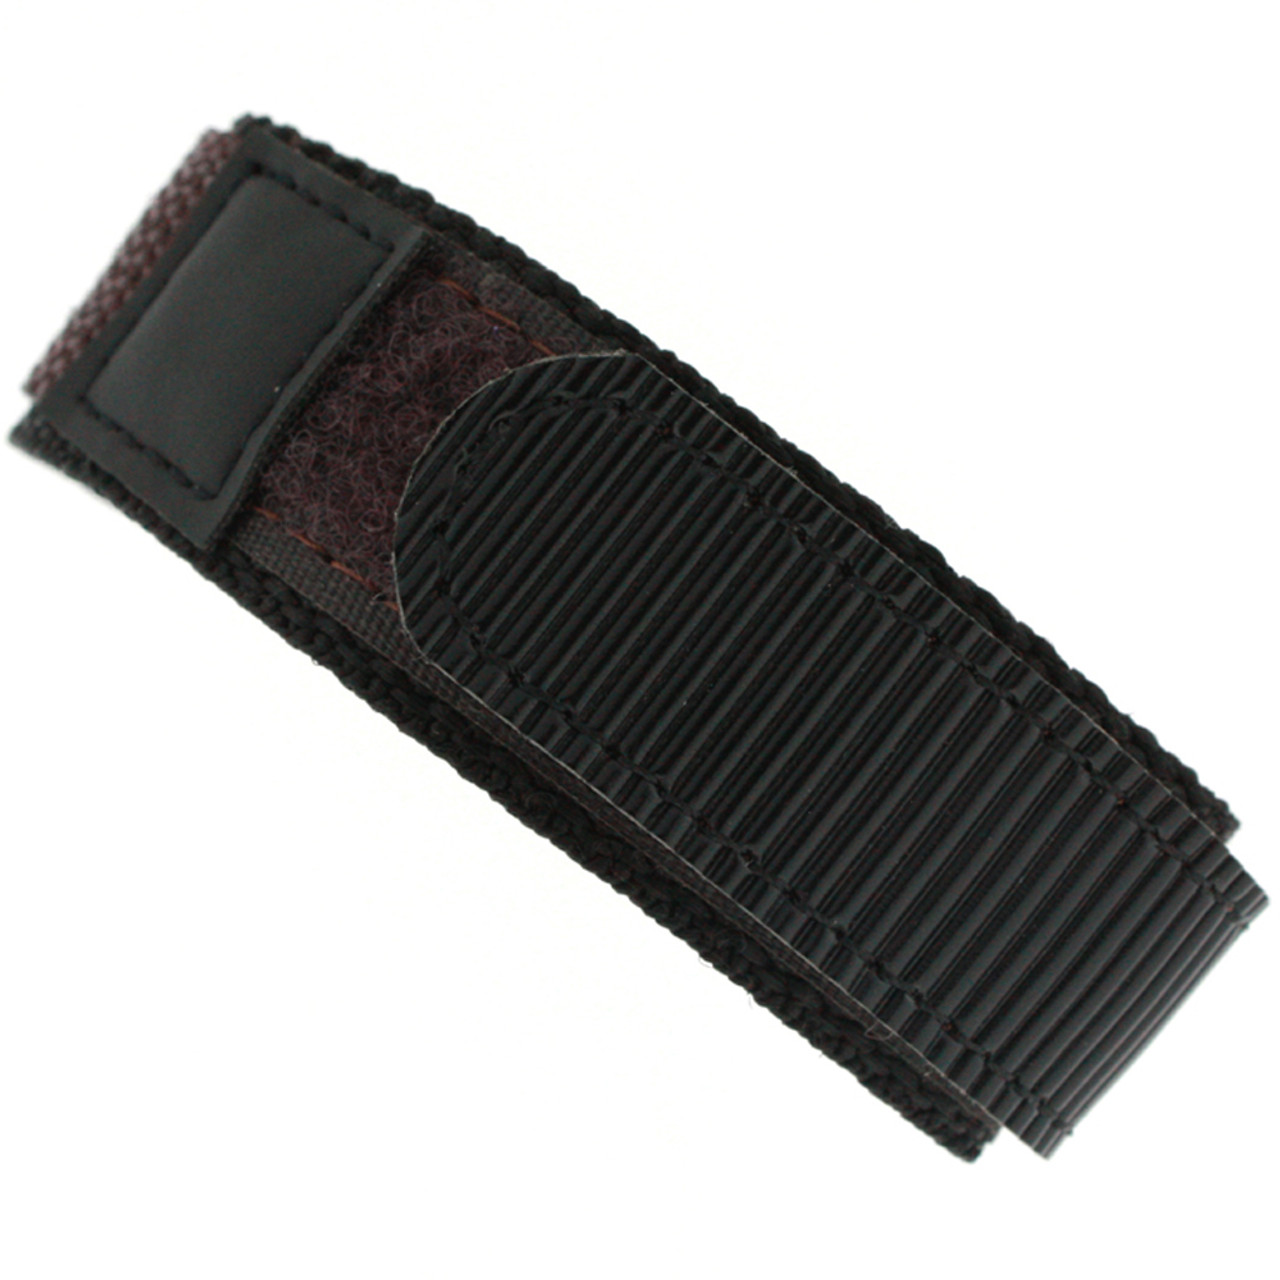 20mm watch strap